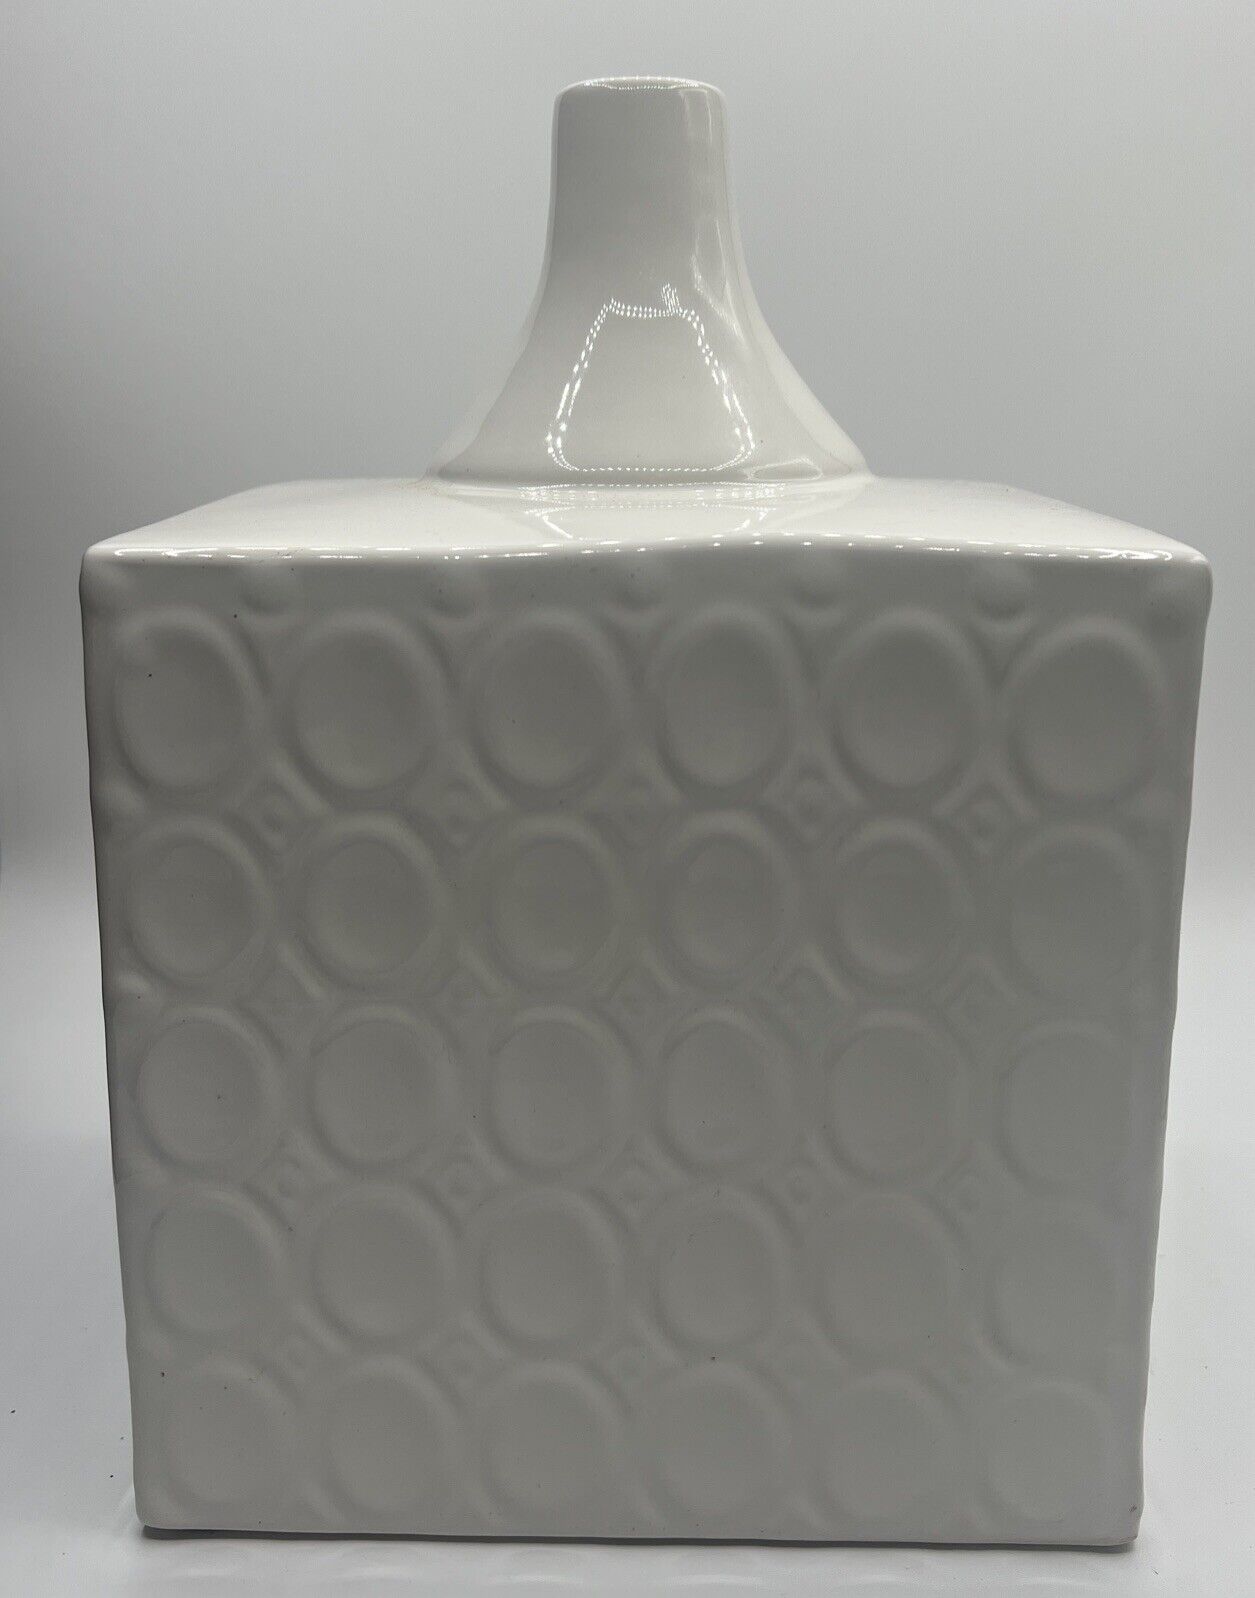 Vintage White Ceramic Mod Geometric Cube Vase Oval Print Glazed 8x8 Square Box